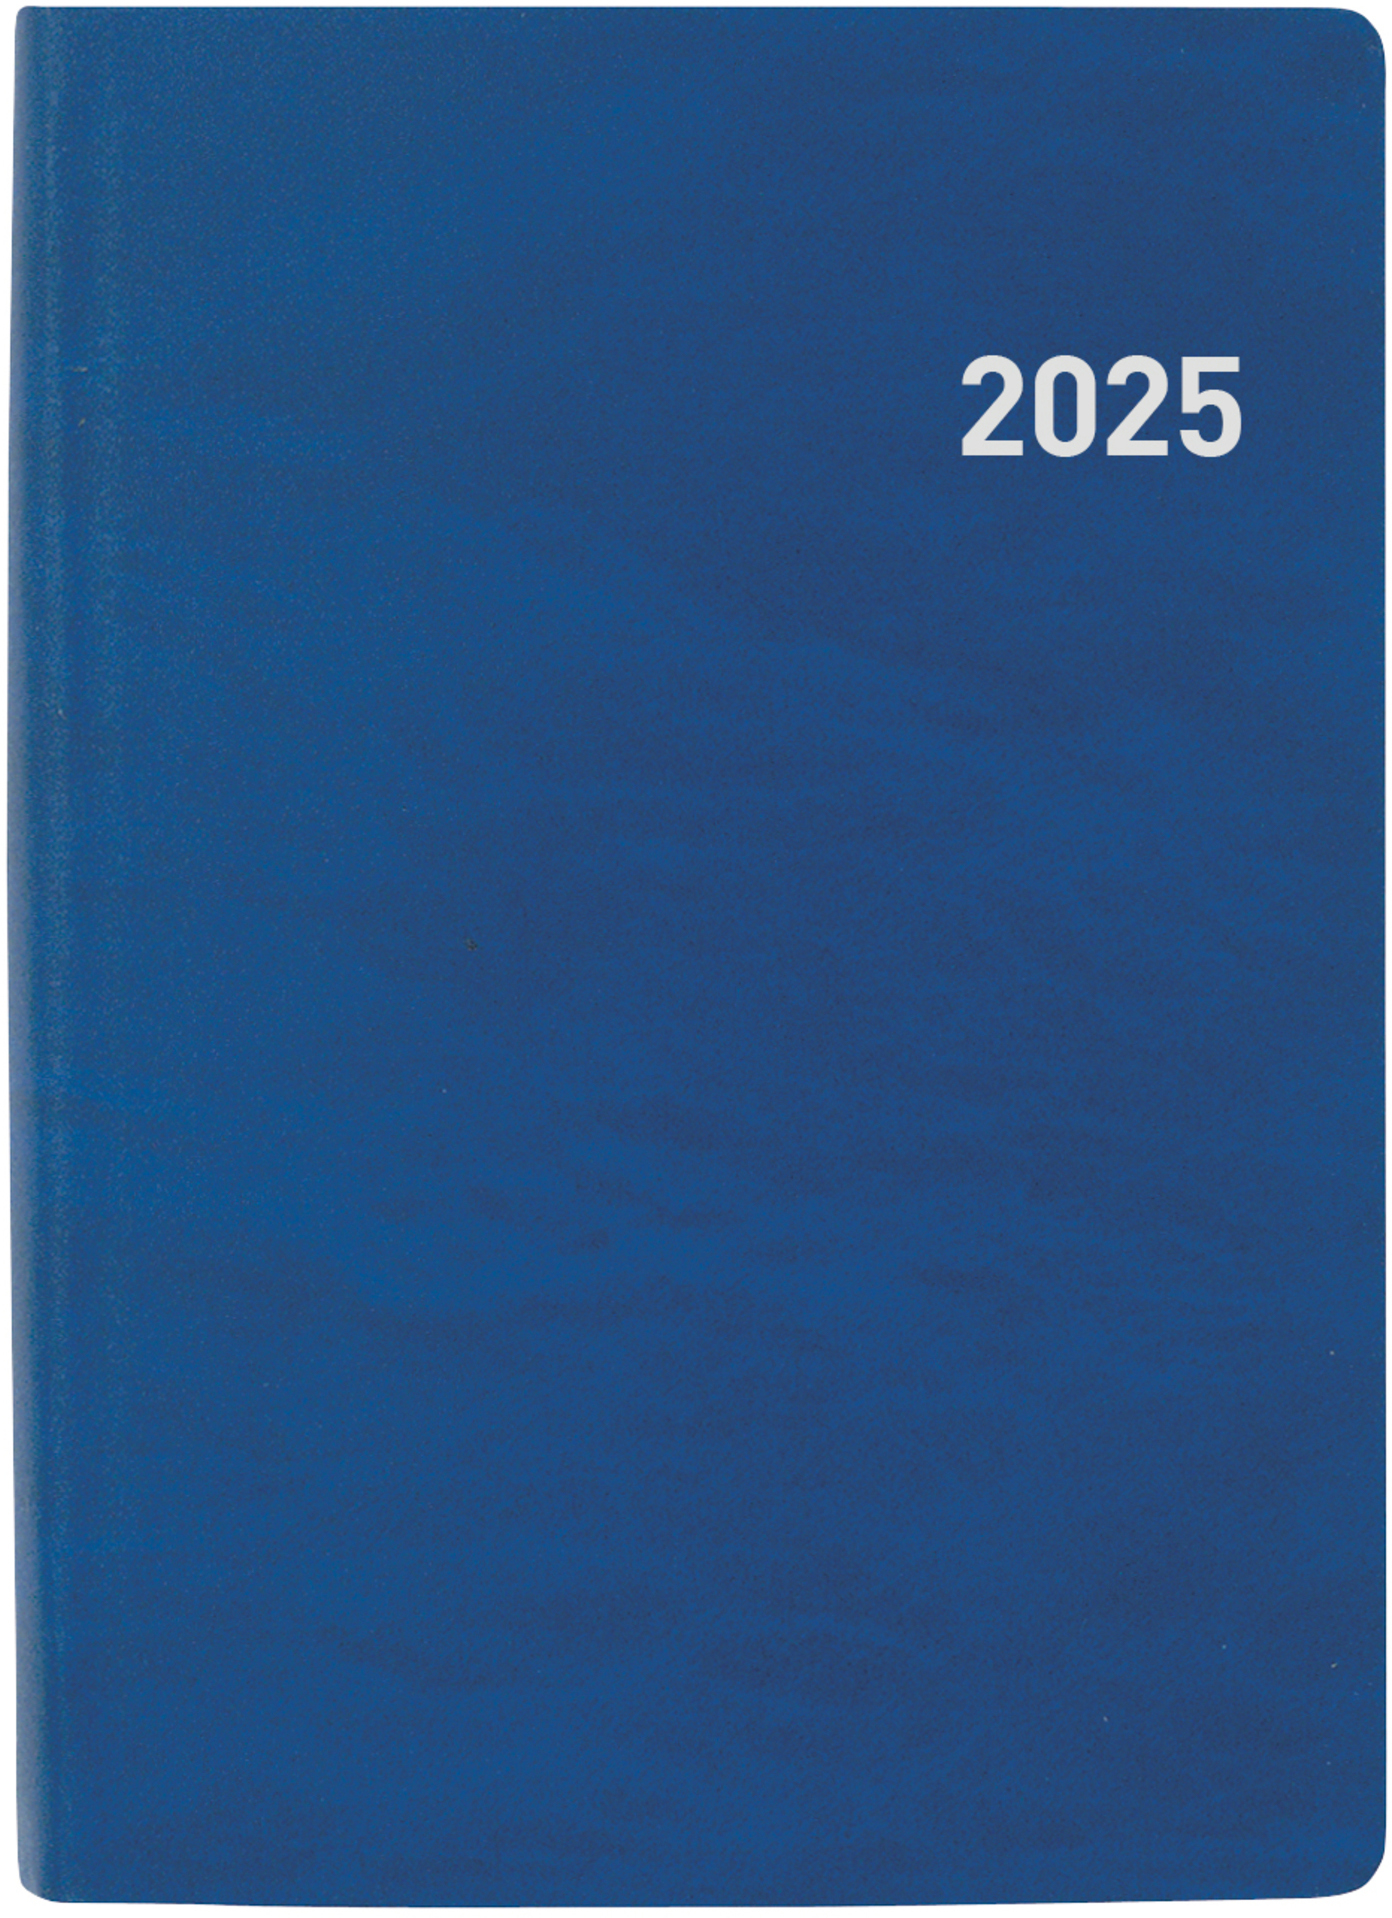 BIELLA Agenda Rex 2025 825301050025 1S/2P bleu ML 10.1x14.2cm